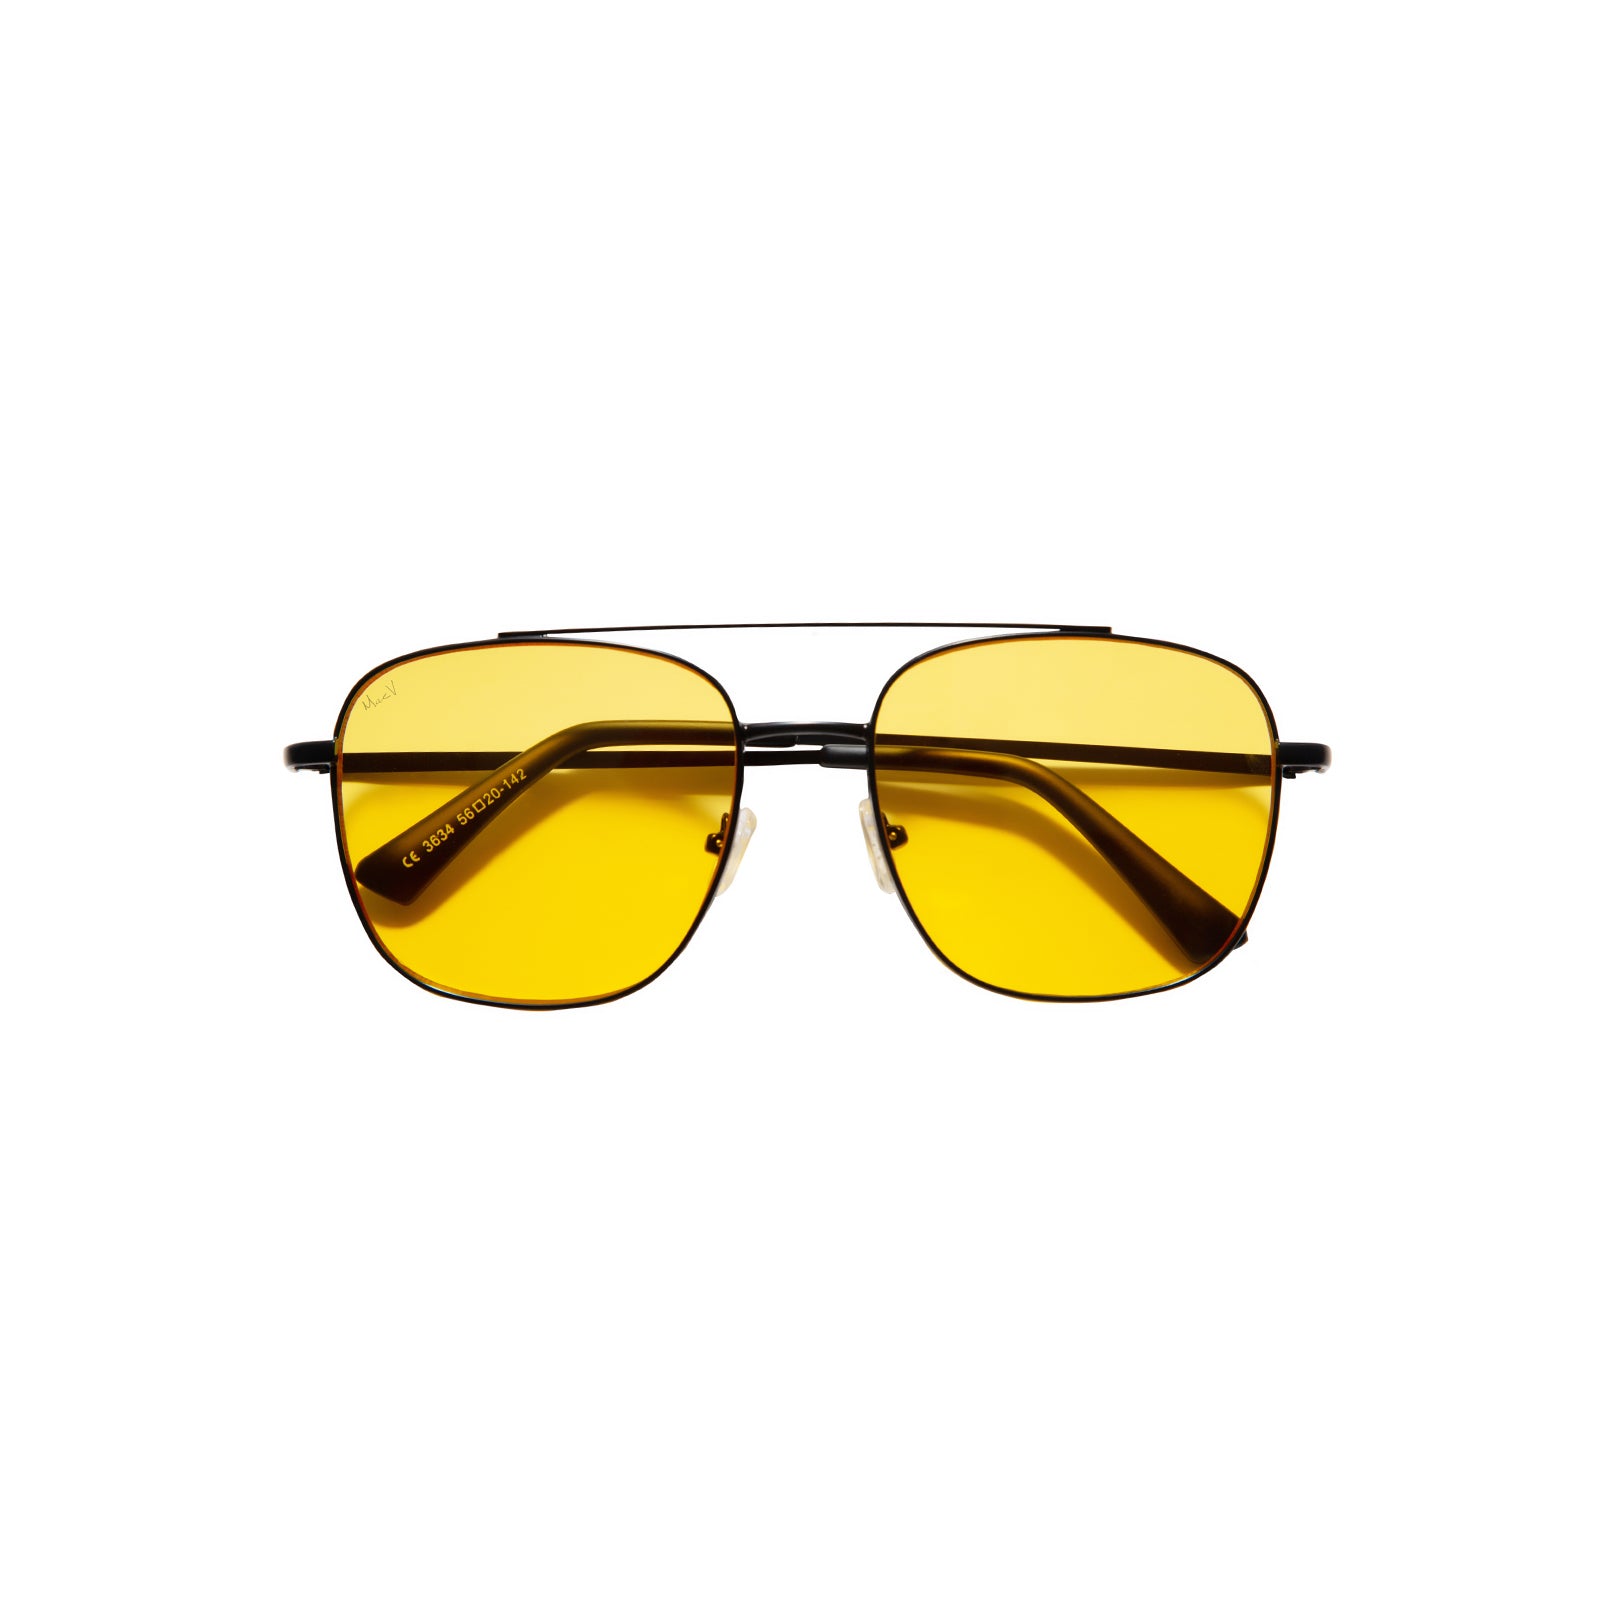 Buy Mac V Wayfarer Men & Women Polarized Sunglasses 100% UV Protected with  Black frame, Black Gradient Lenses & Polycarbonate Material. Small Size. at  Amazon.in